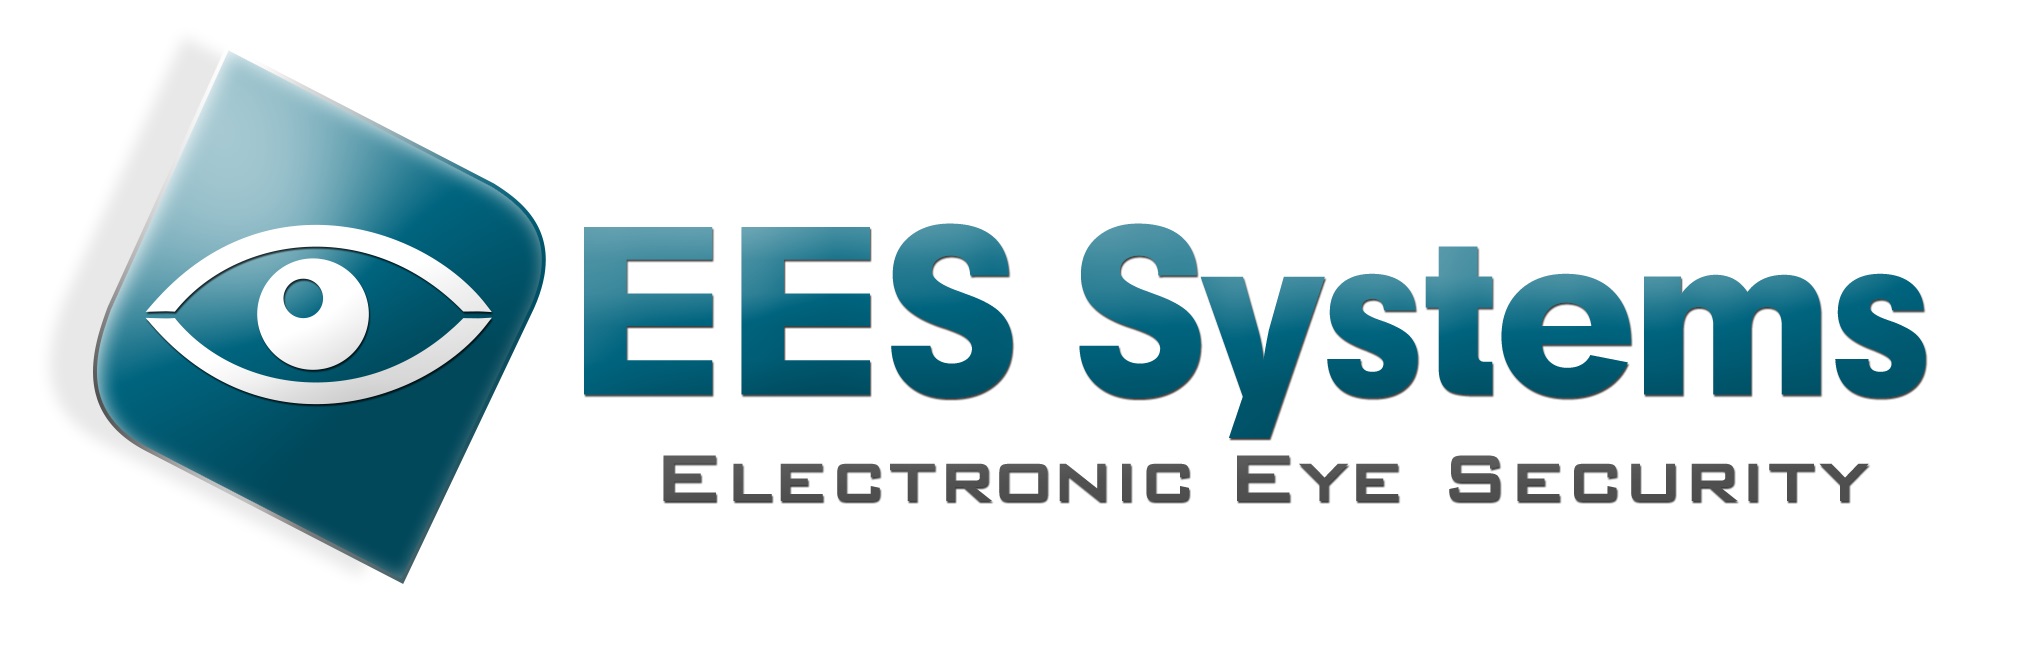 Electronic Eye Security, Inc. Logo